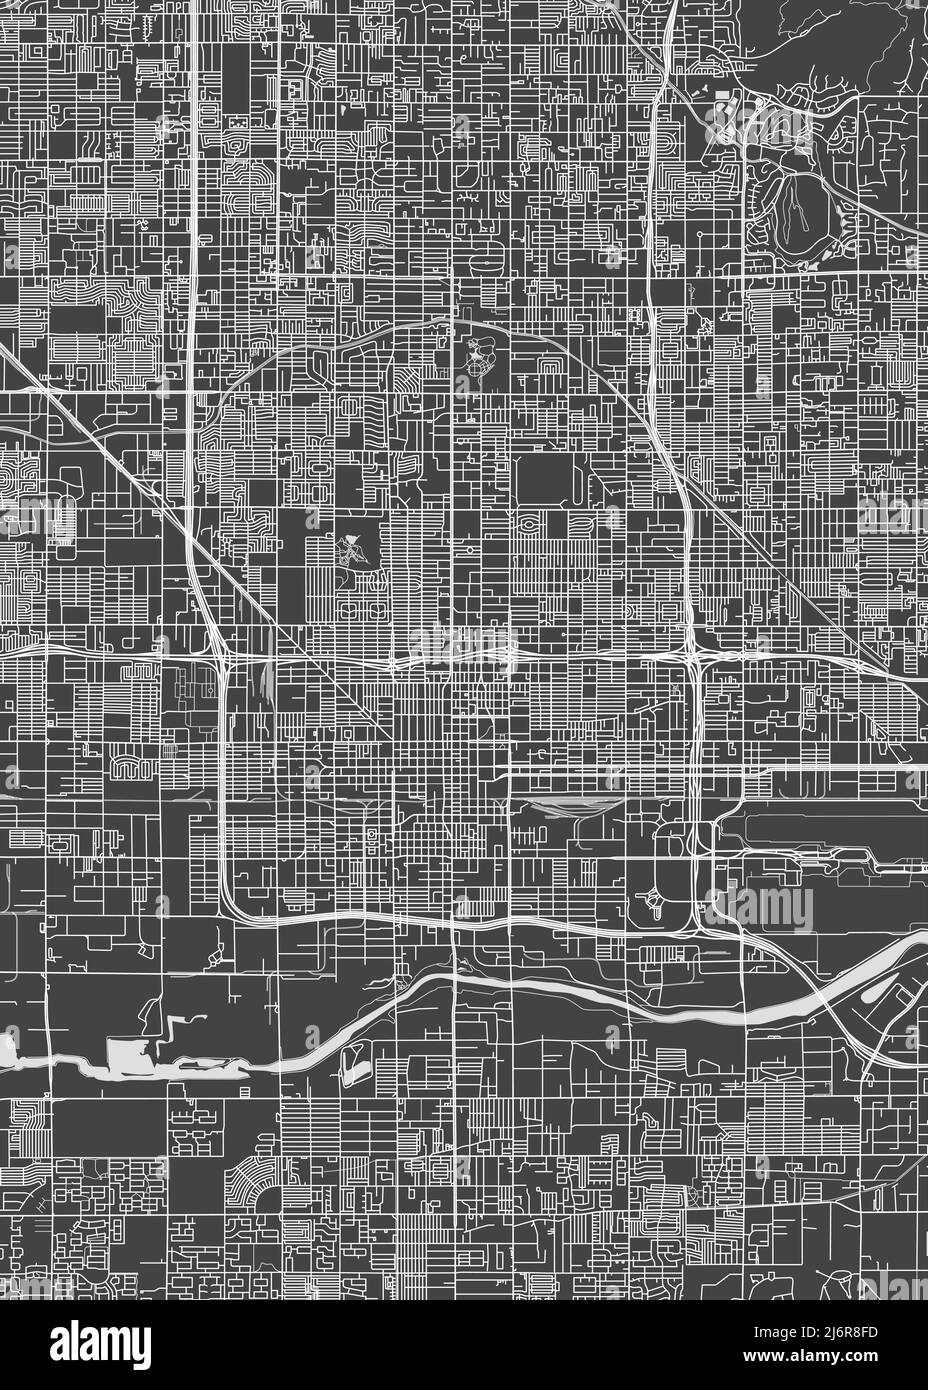 City map Phoenix, monochrome detailed plan, vector illustration Stock Vector